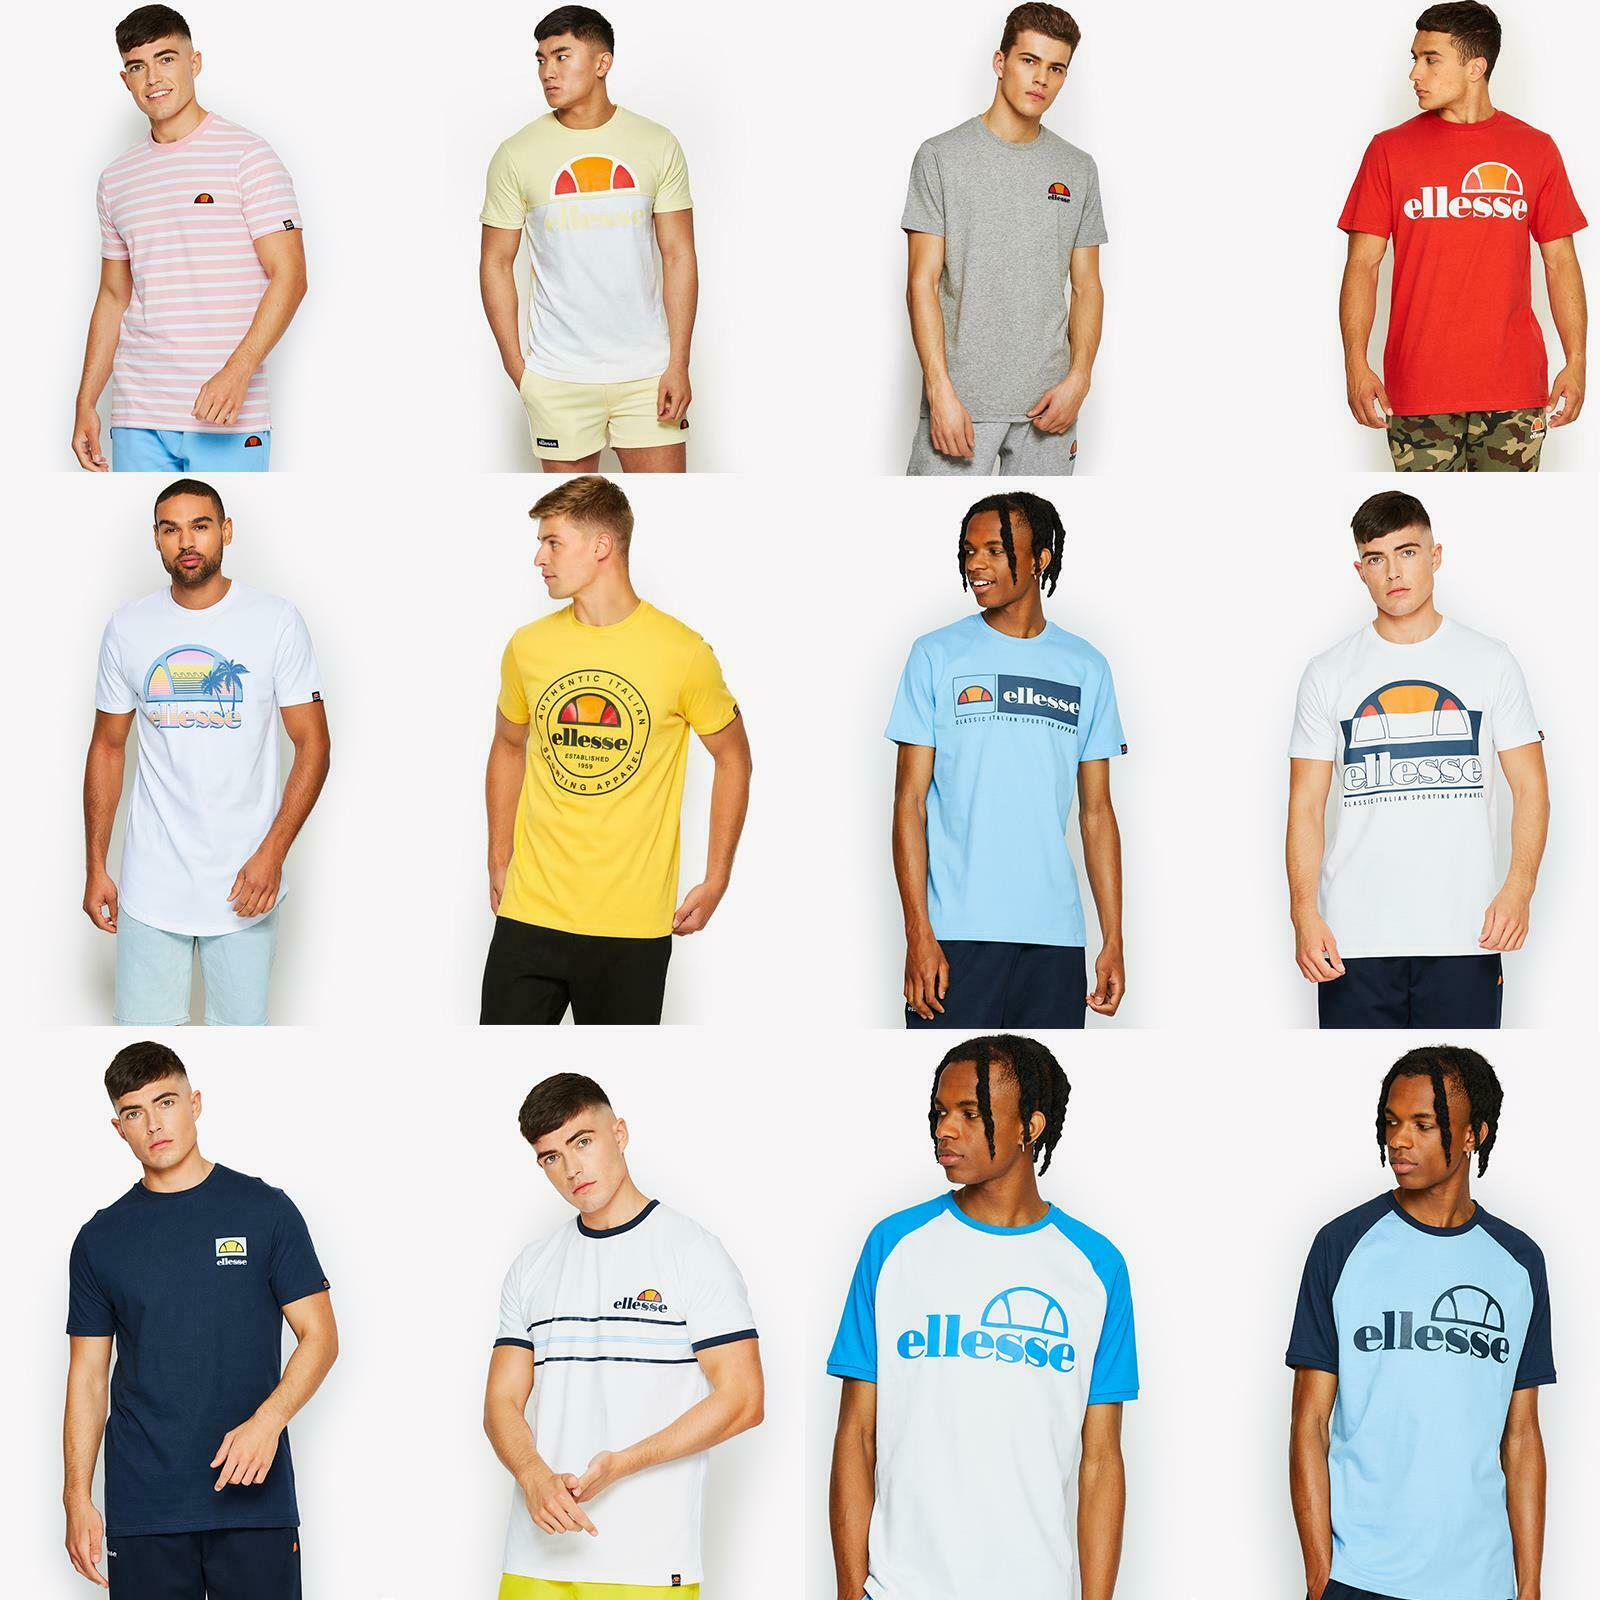 Bargain, Clearance Sale Authentic Ellesse Men's T-shirt x 10 mixed styles 